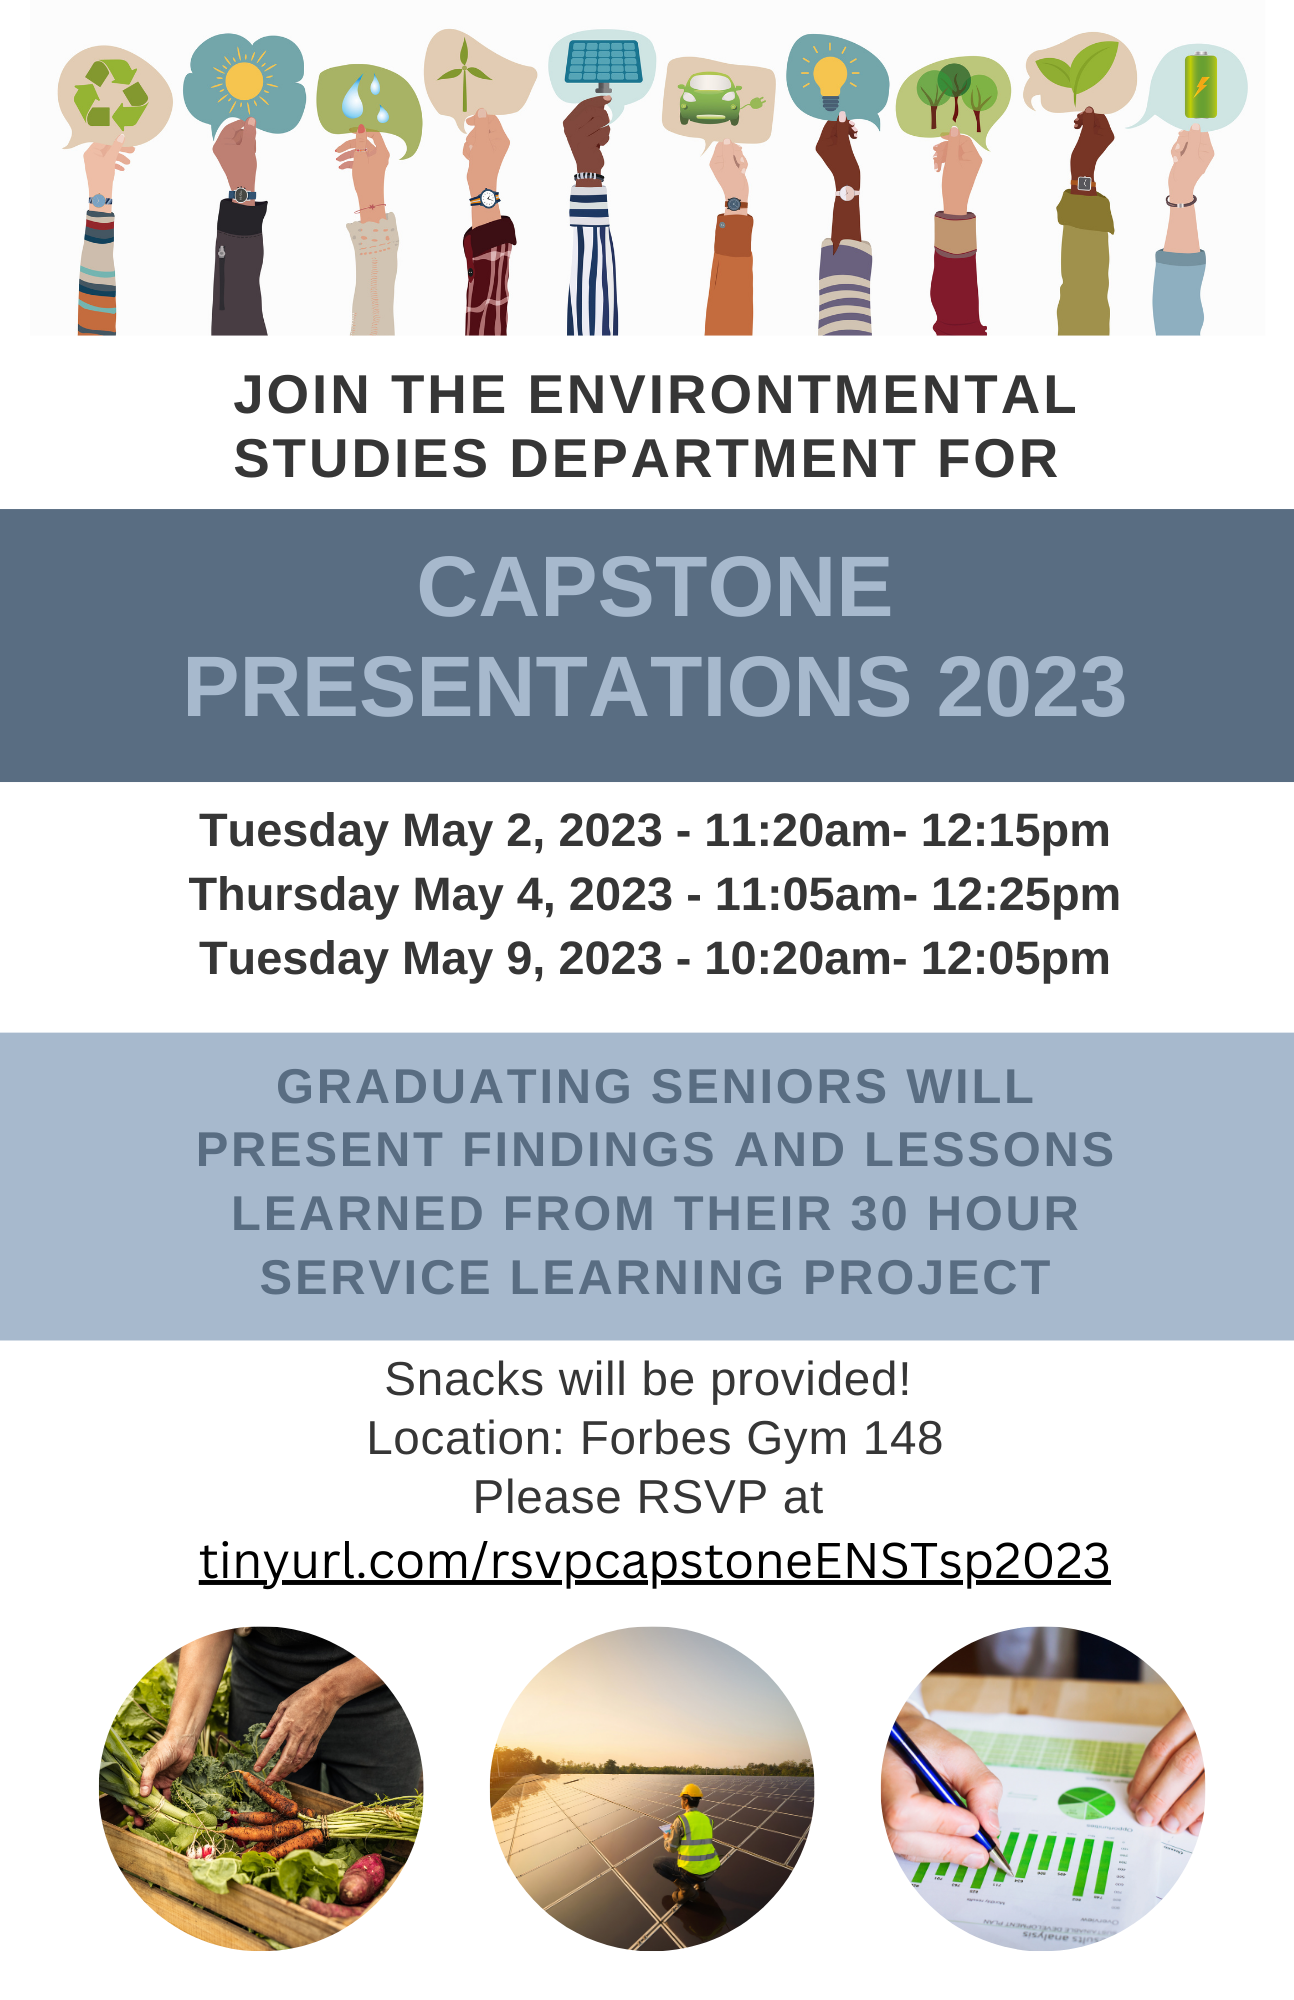 Capstone presentations